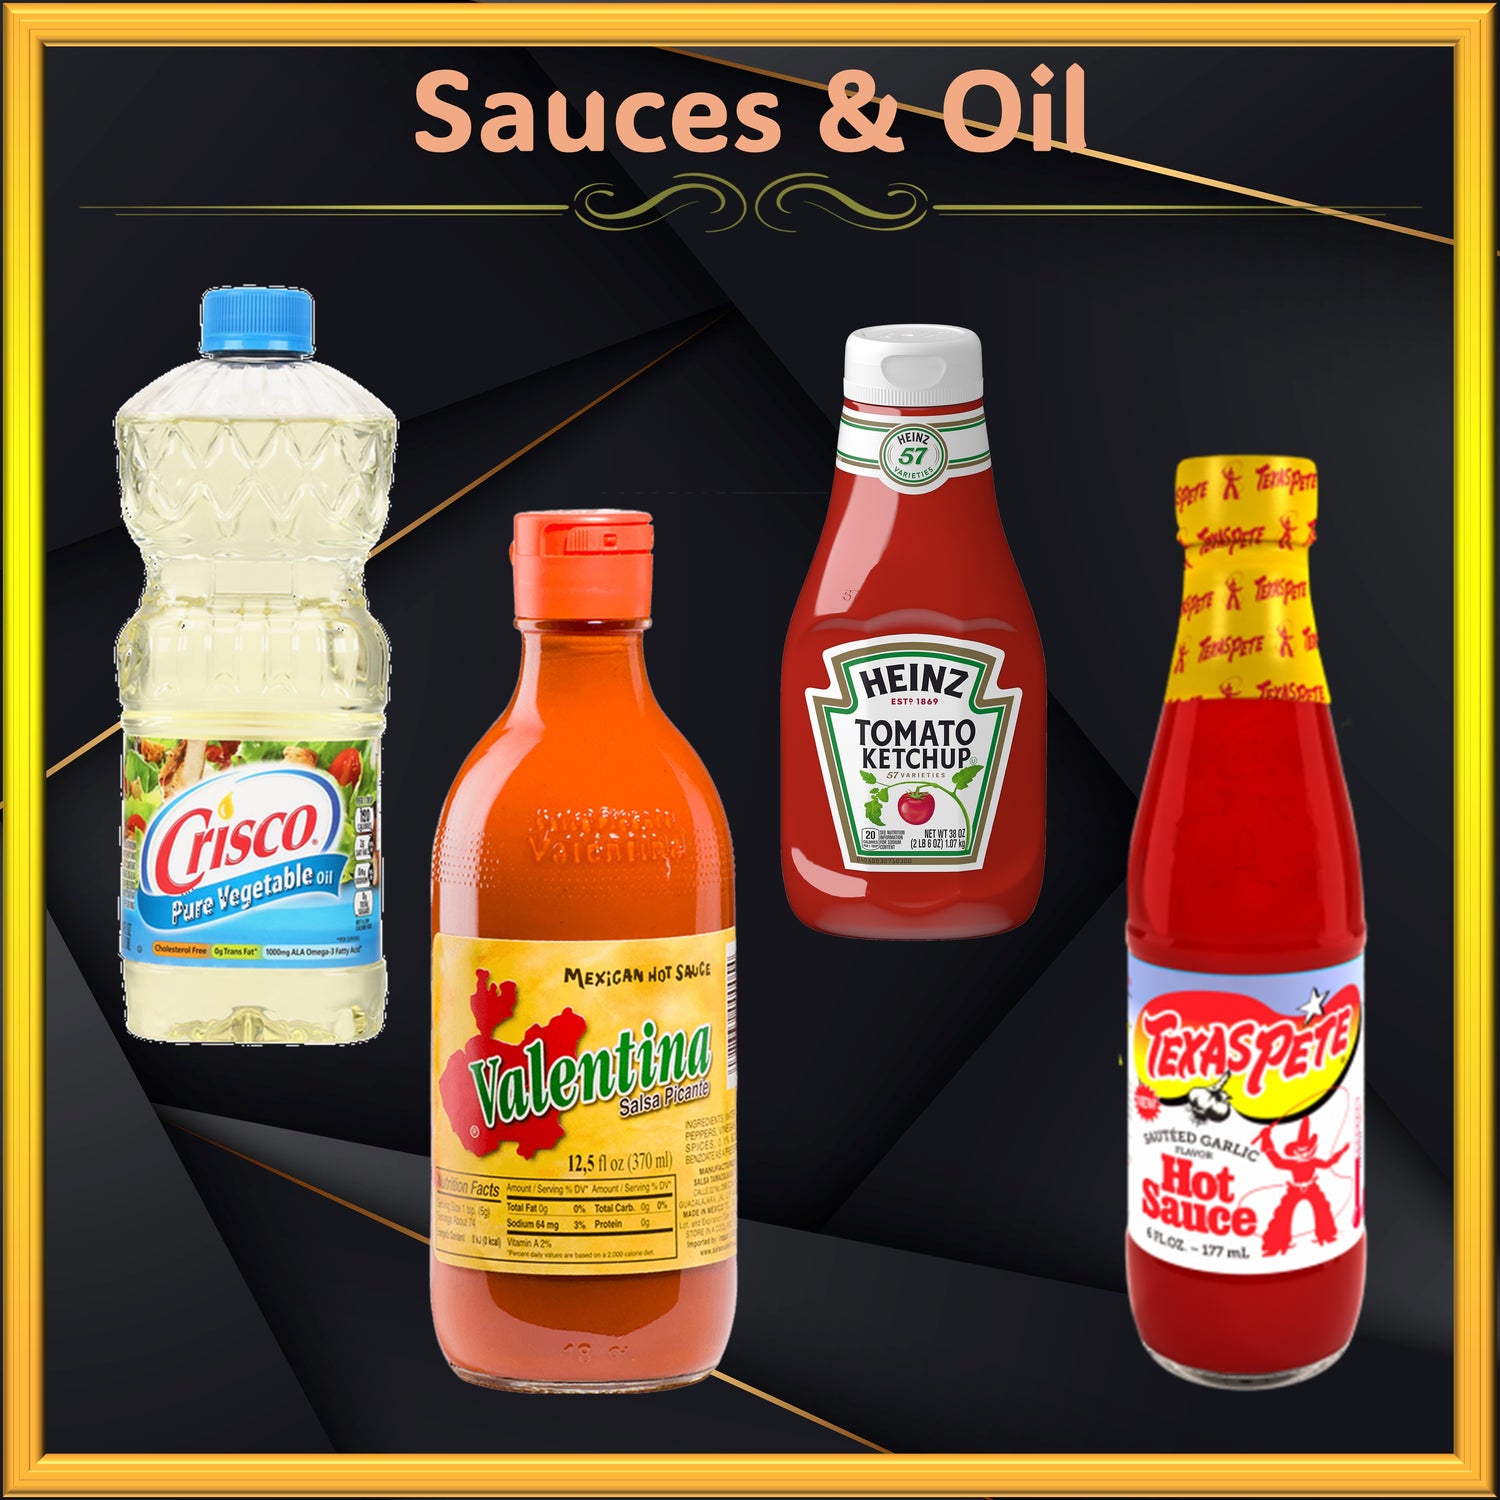 Sauces & Oil